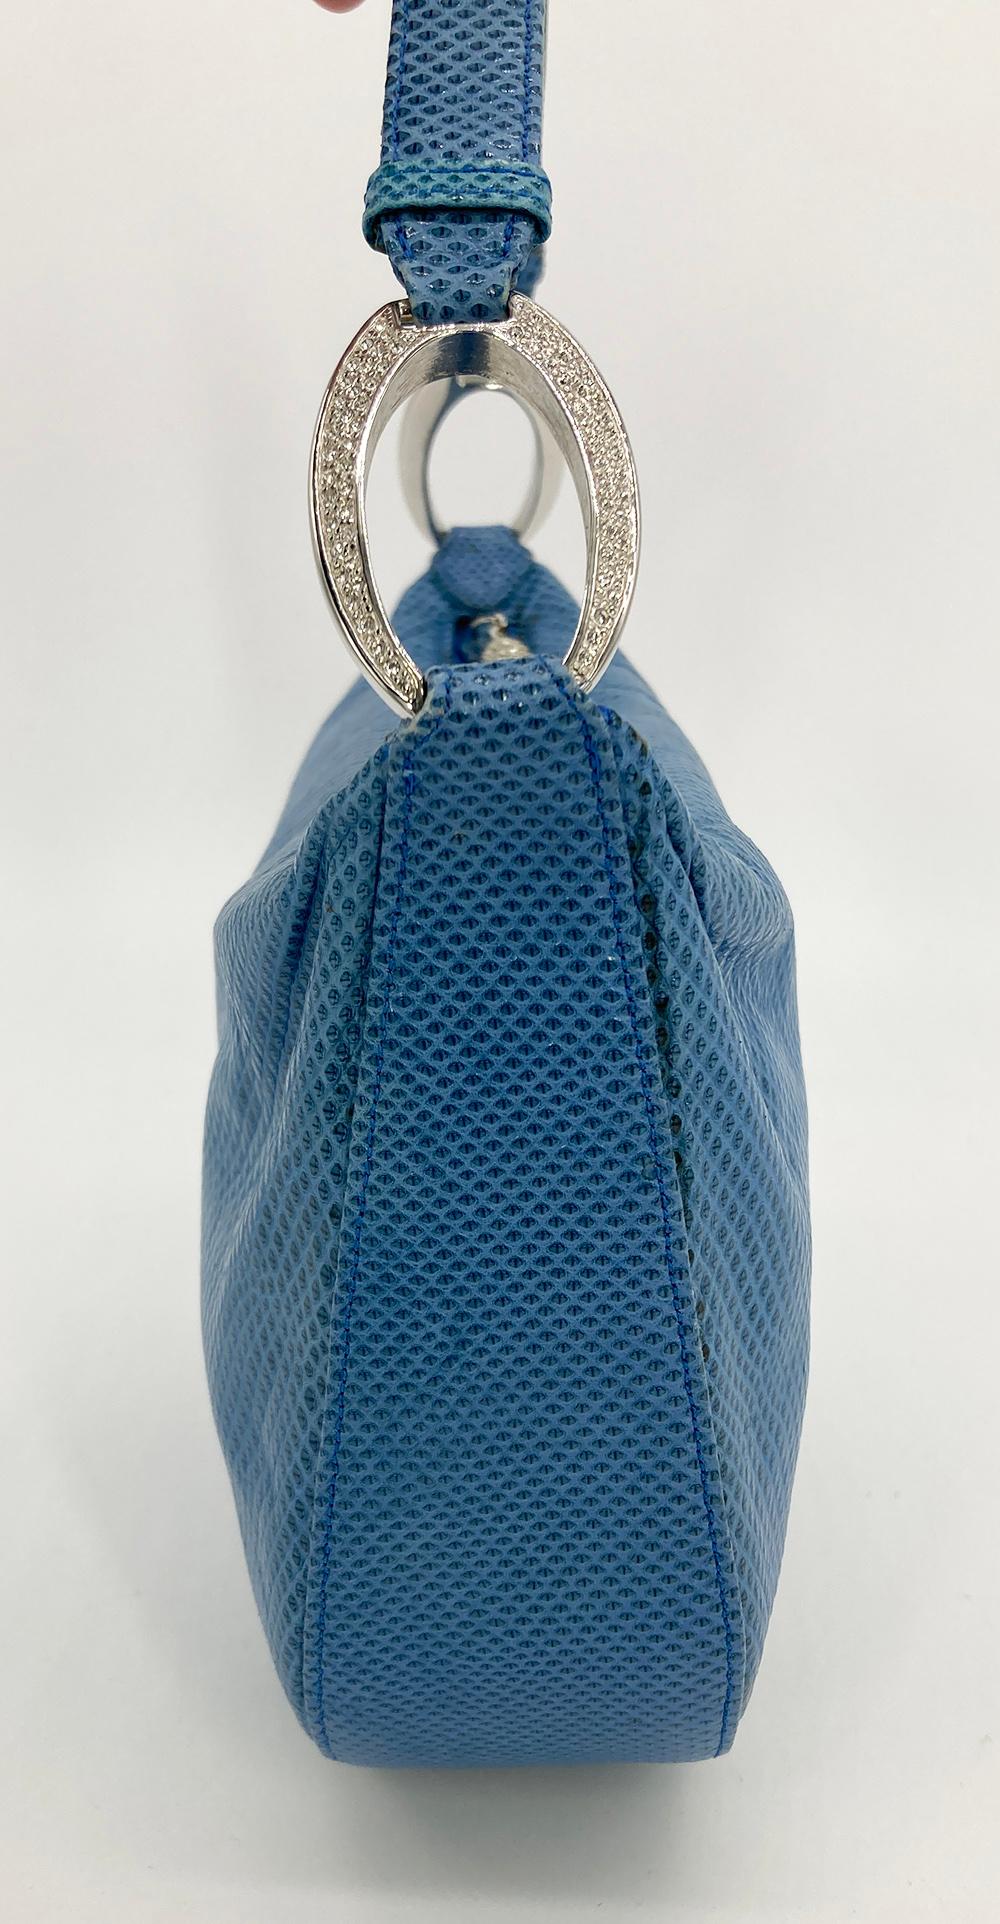 Judith Leiber Blue Lizard Crystal Accent Handbag In Fair Condition For Sale In Philadelphia, PA